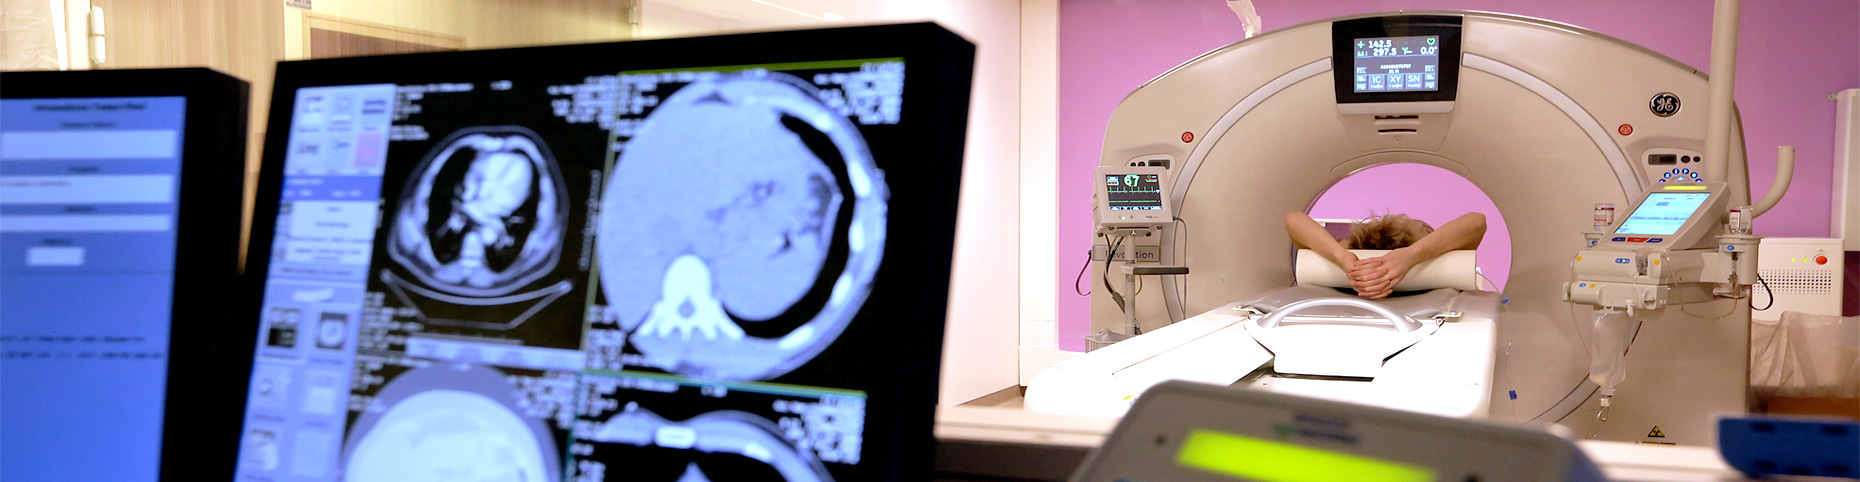 scanner imagerie médicale nancy